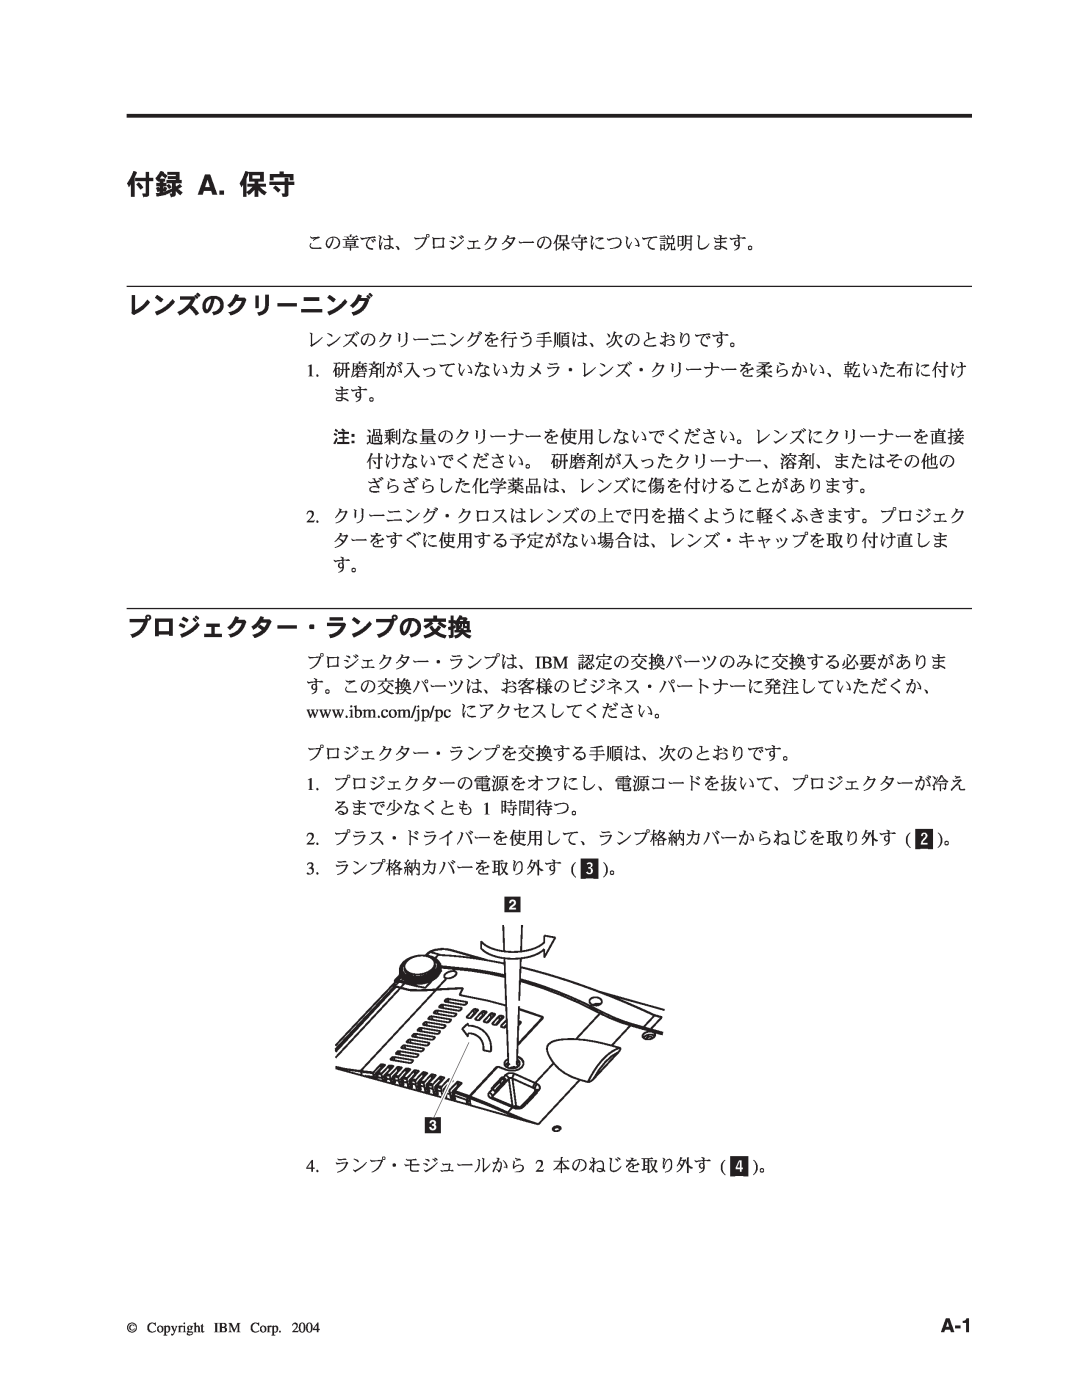 IBM M400 manual 付録 A. 保守, レンズのクリーニング, プロジェクター・ランプの交換 